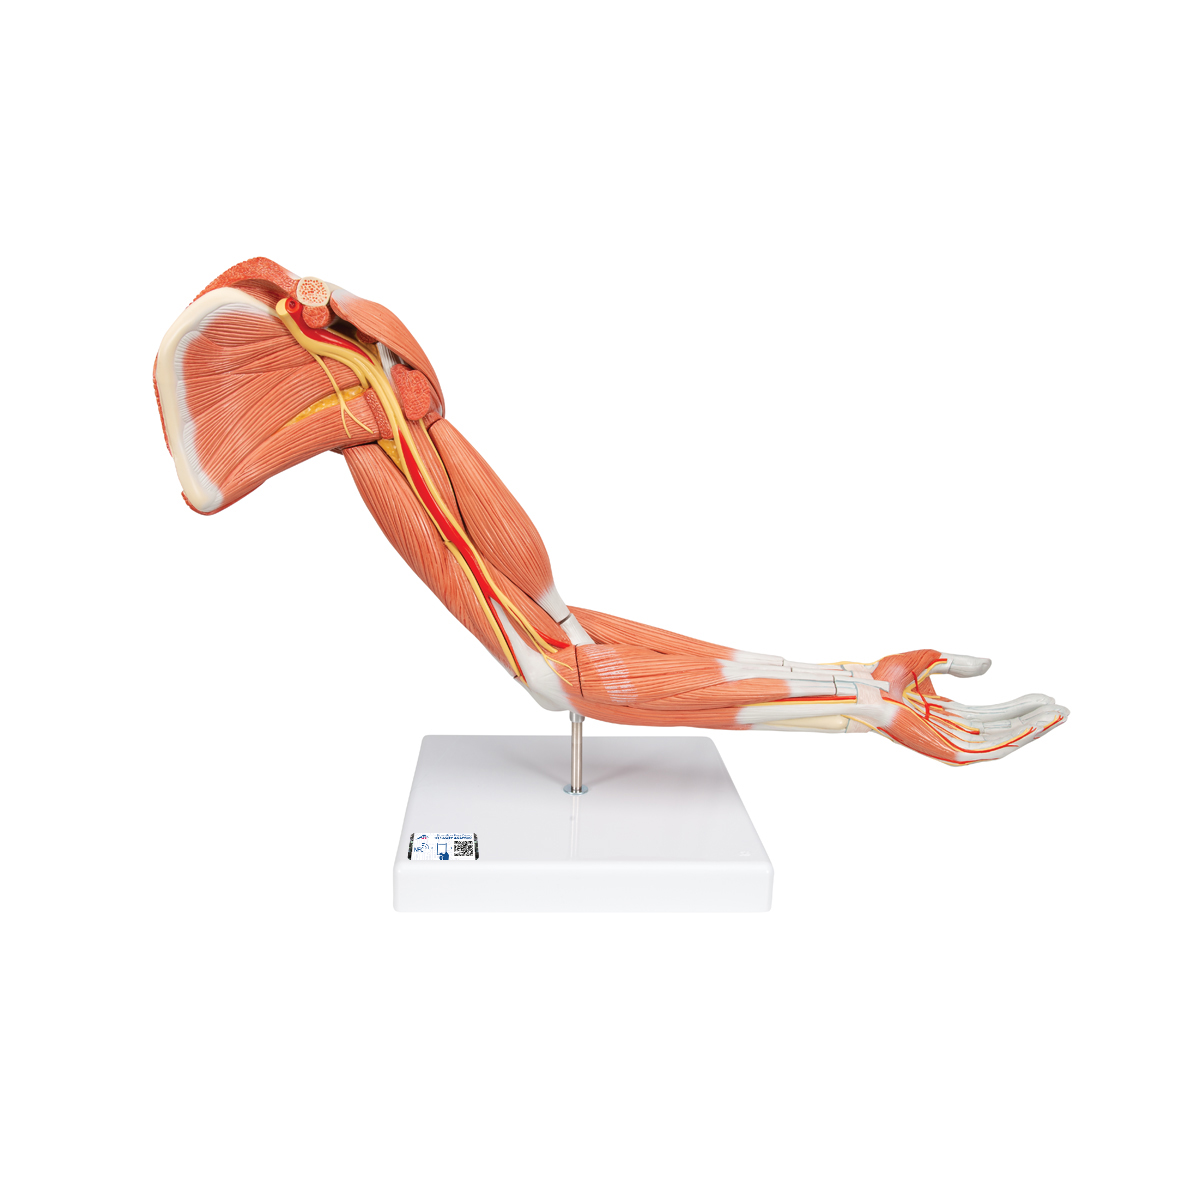 Armmuskel Modell, 6-teilig - 3B Smart Anatomy, Bestellnummer 1000347, M11, 3B Scientific